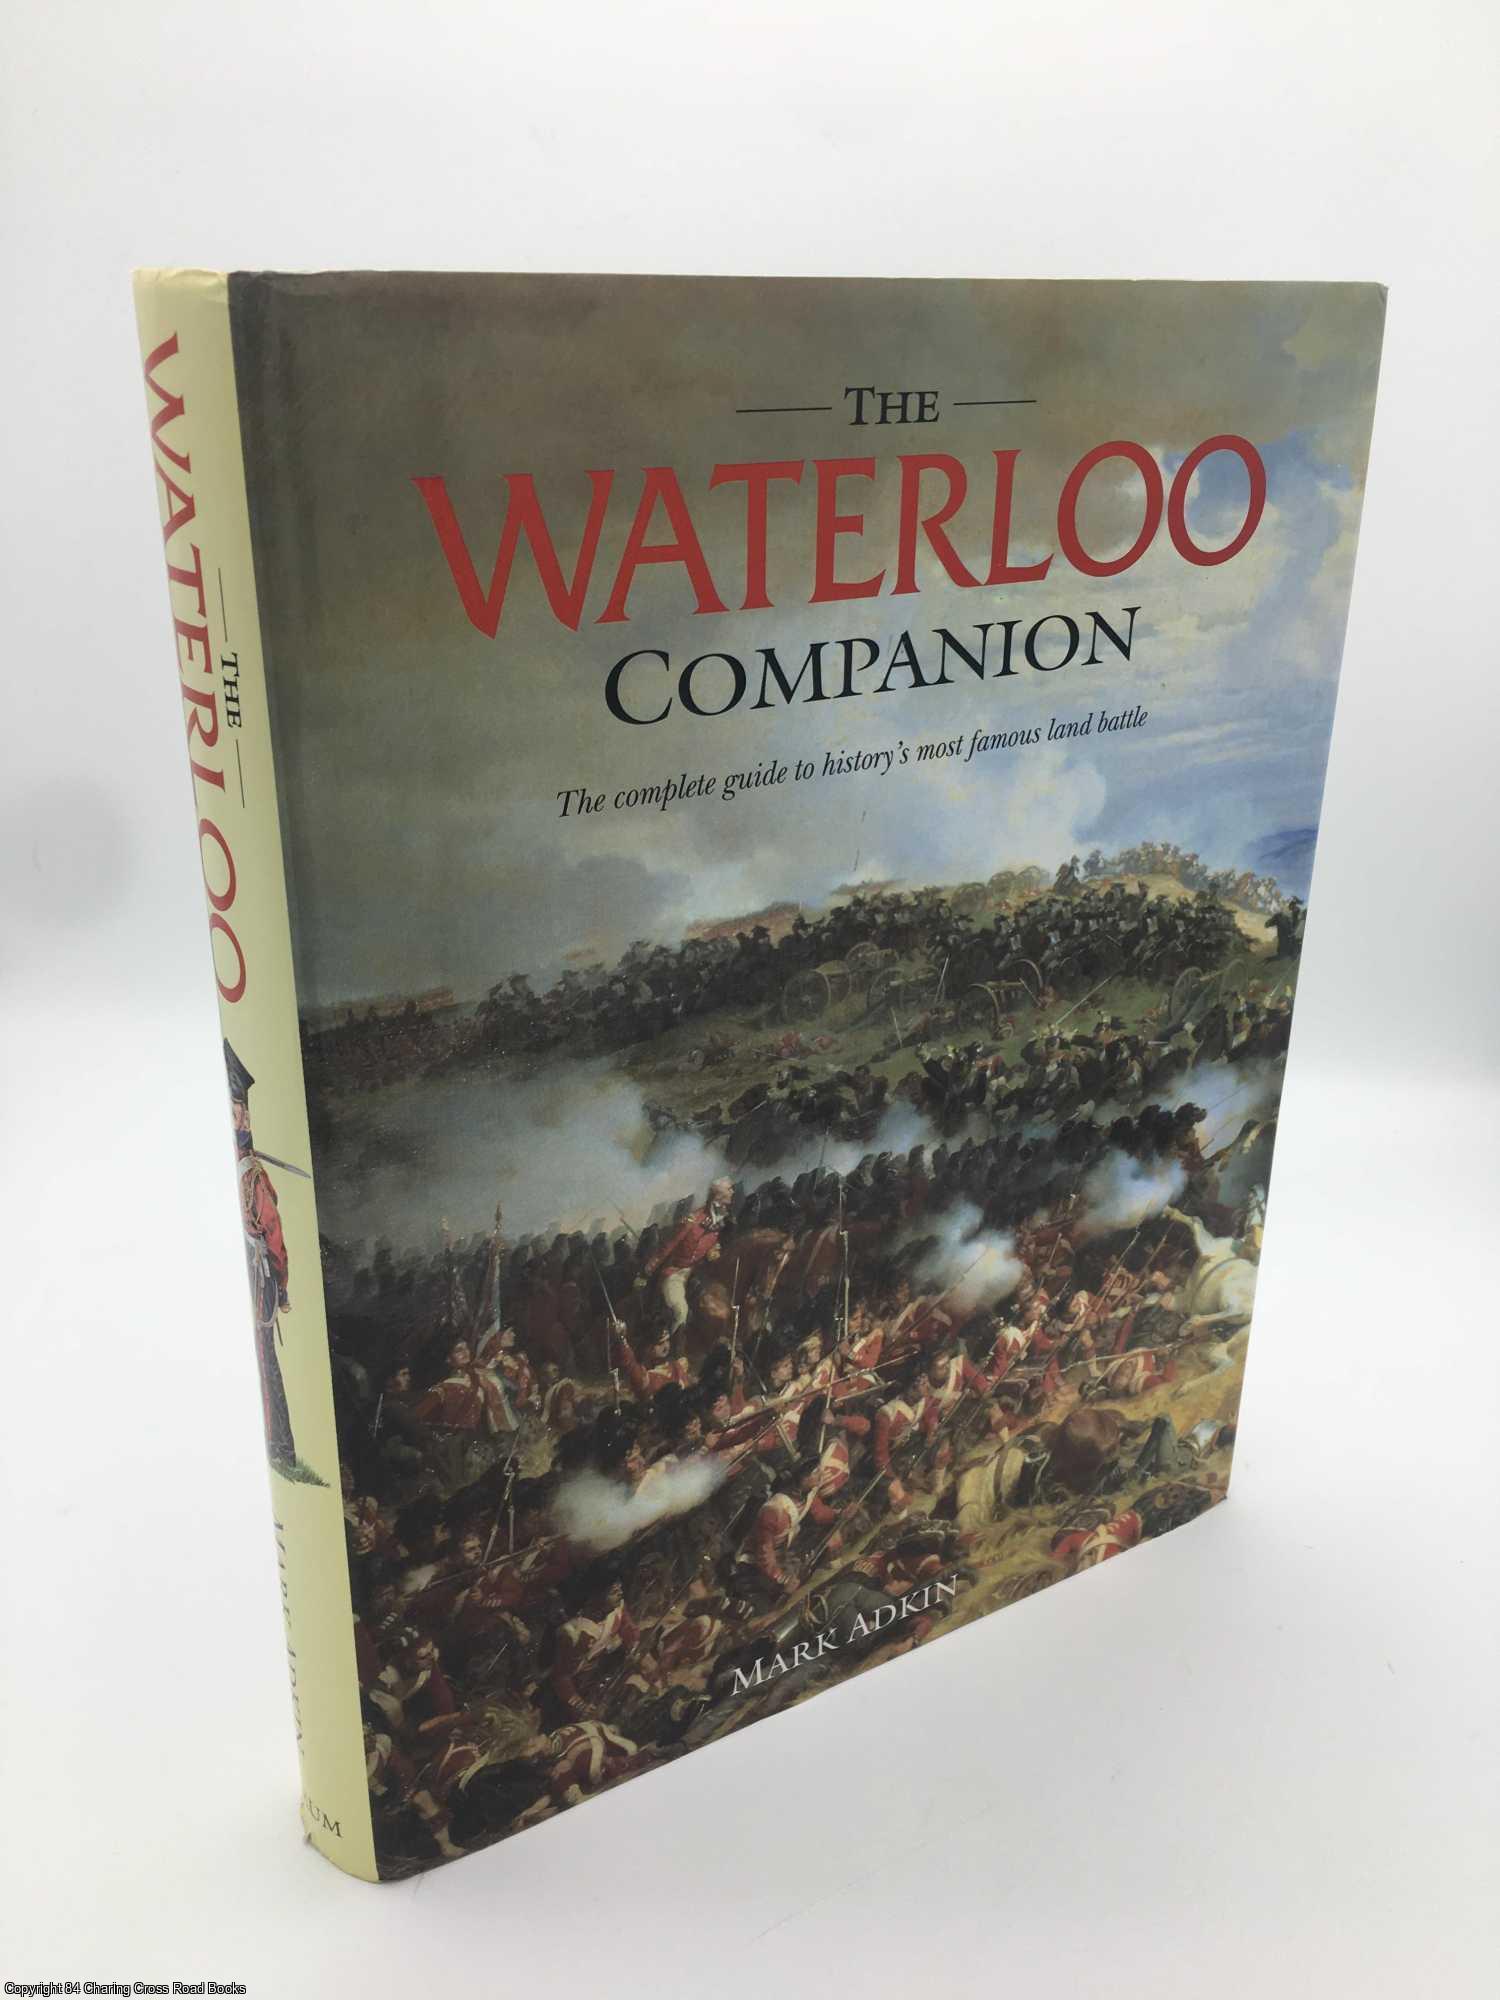 Adkin, Mark - The Waterloo Companion